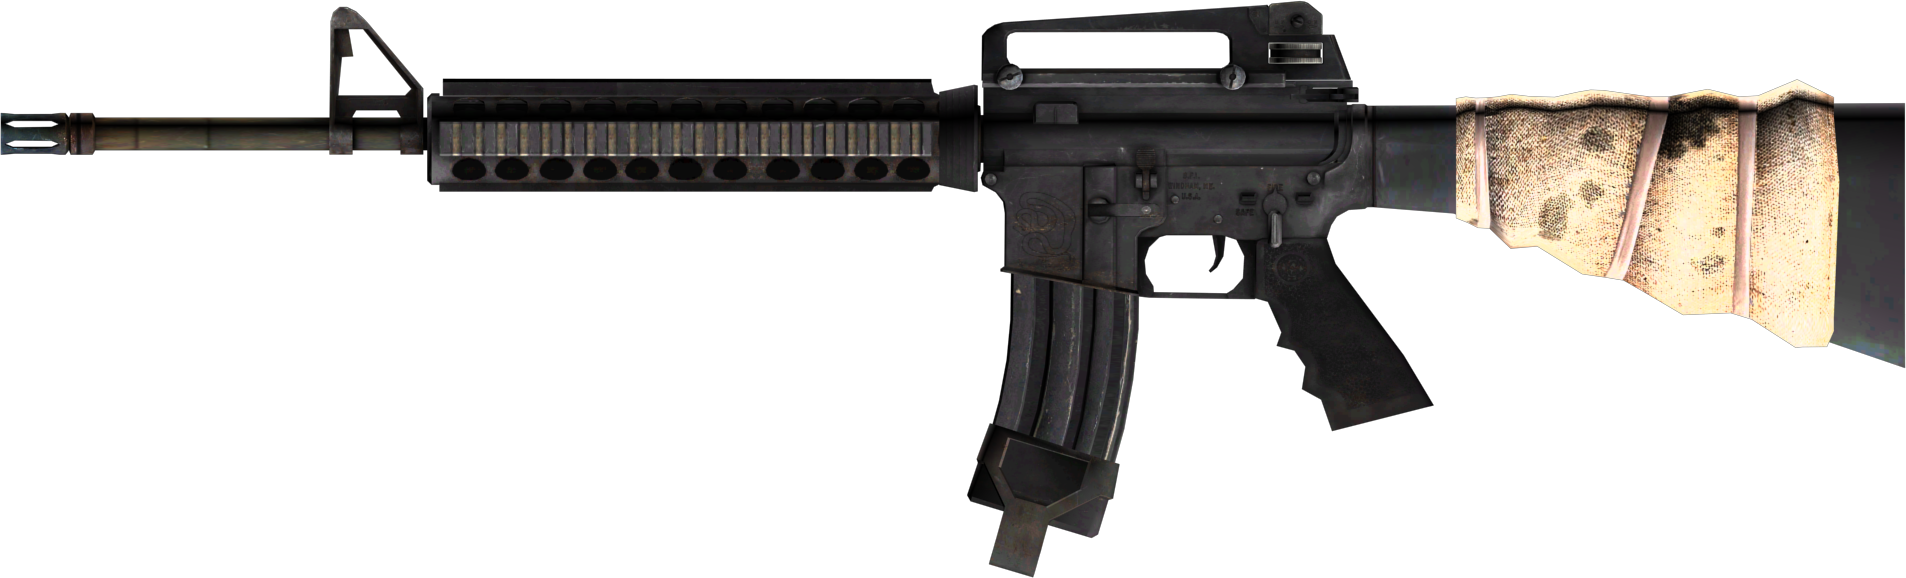 M16 Usa Assault Rifle Png - Assault Rifle, Transparent background PNG HD thumbnail